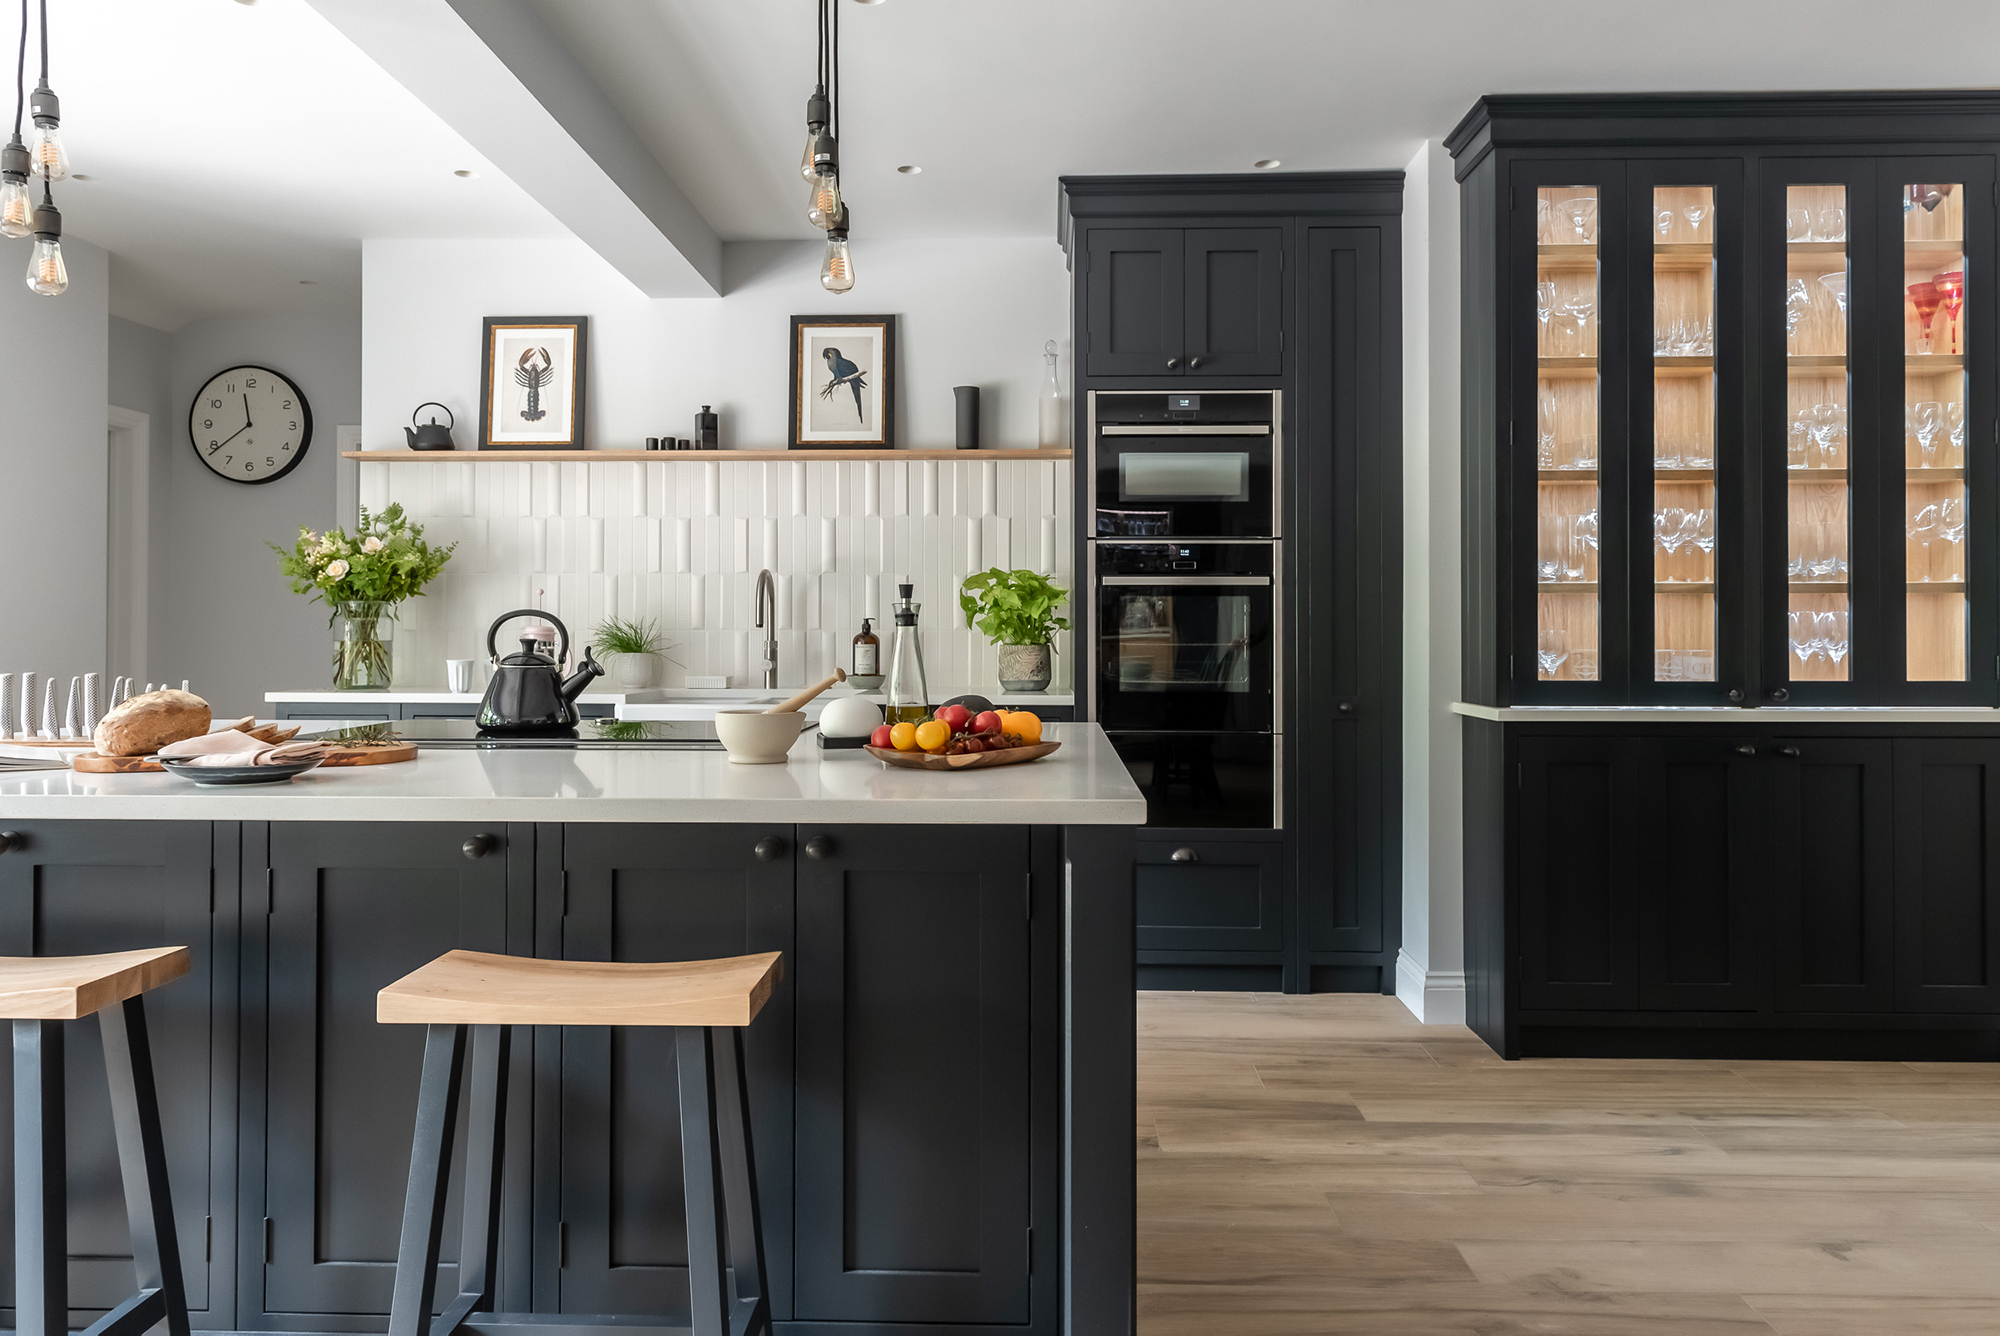 The Dene Kitchen | Shere Kitchens - beautiful kitchens custom made in ...